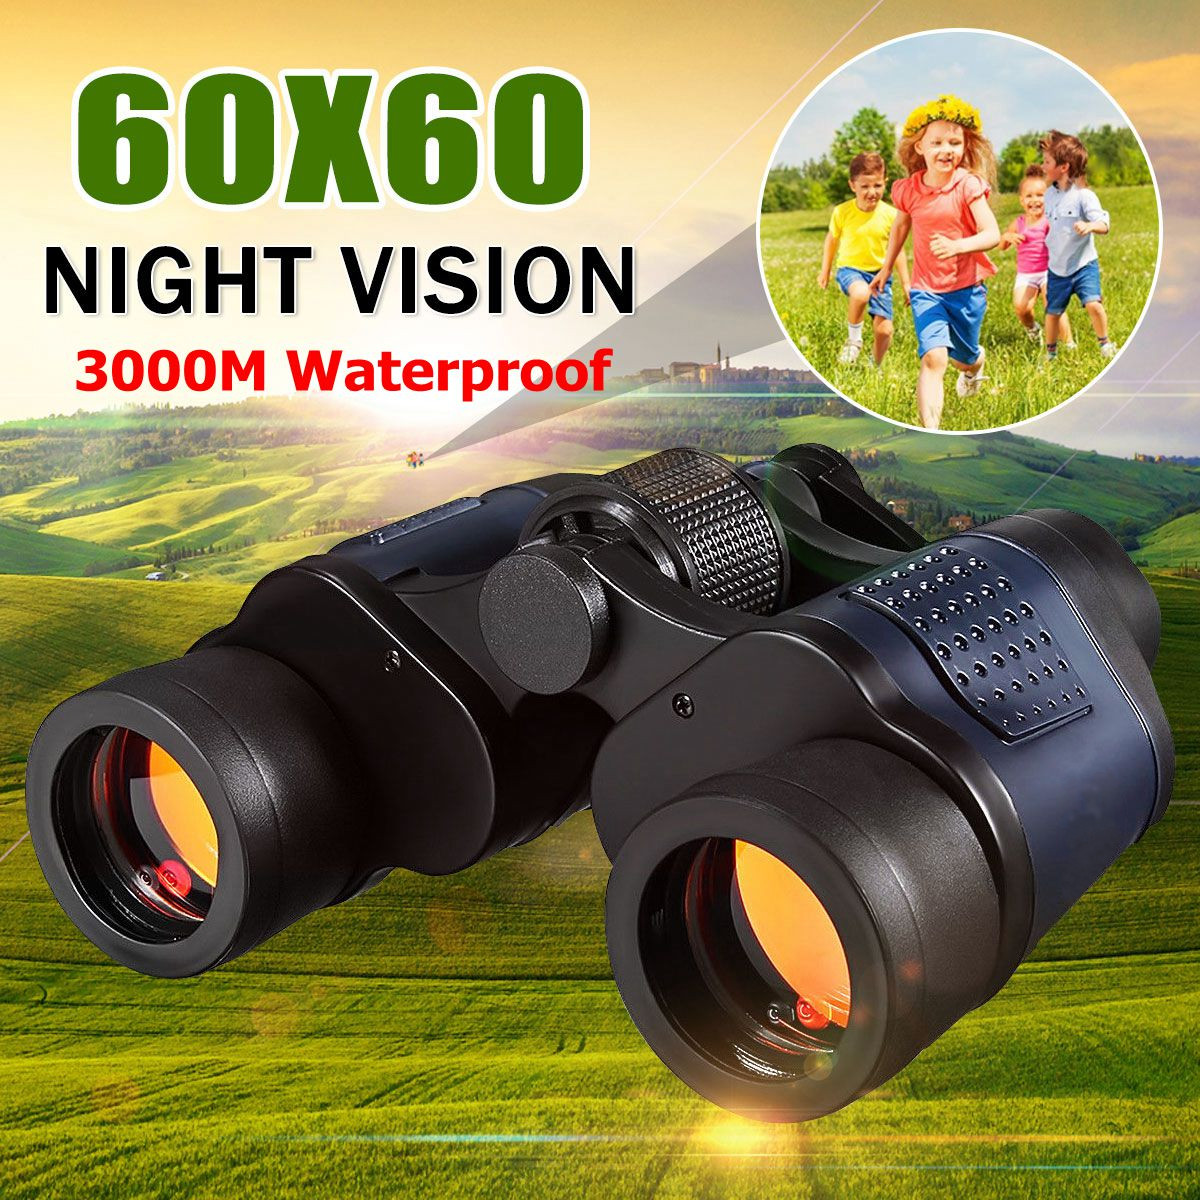 HD-Day-Night-Vision-Binocular-Telescope-60x60-3000M-High-Definition-Hunting-Standard-Coordinates-Tel-1199424-5